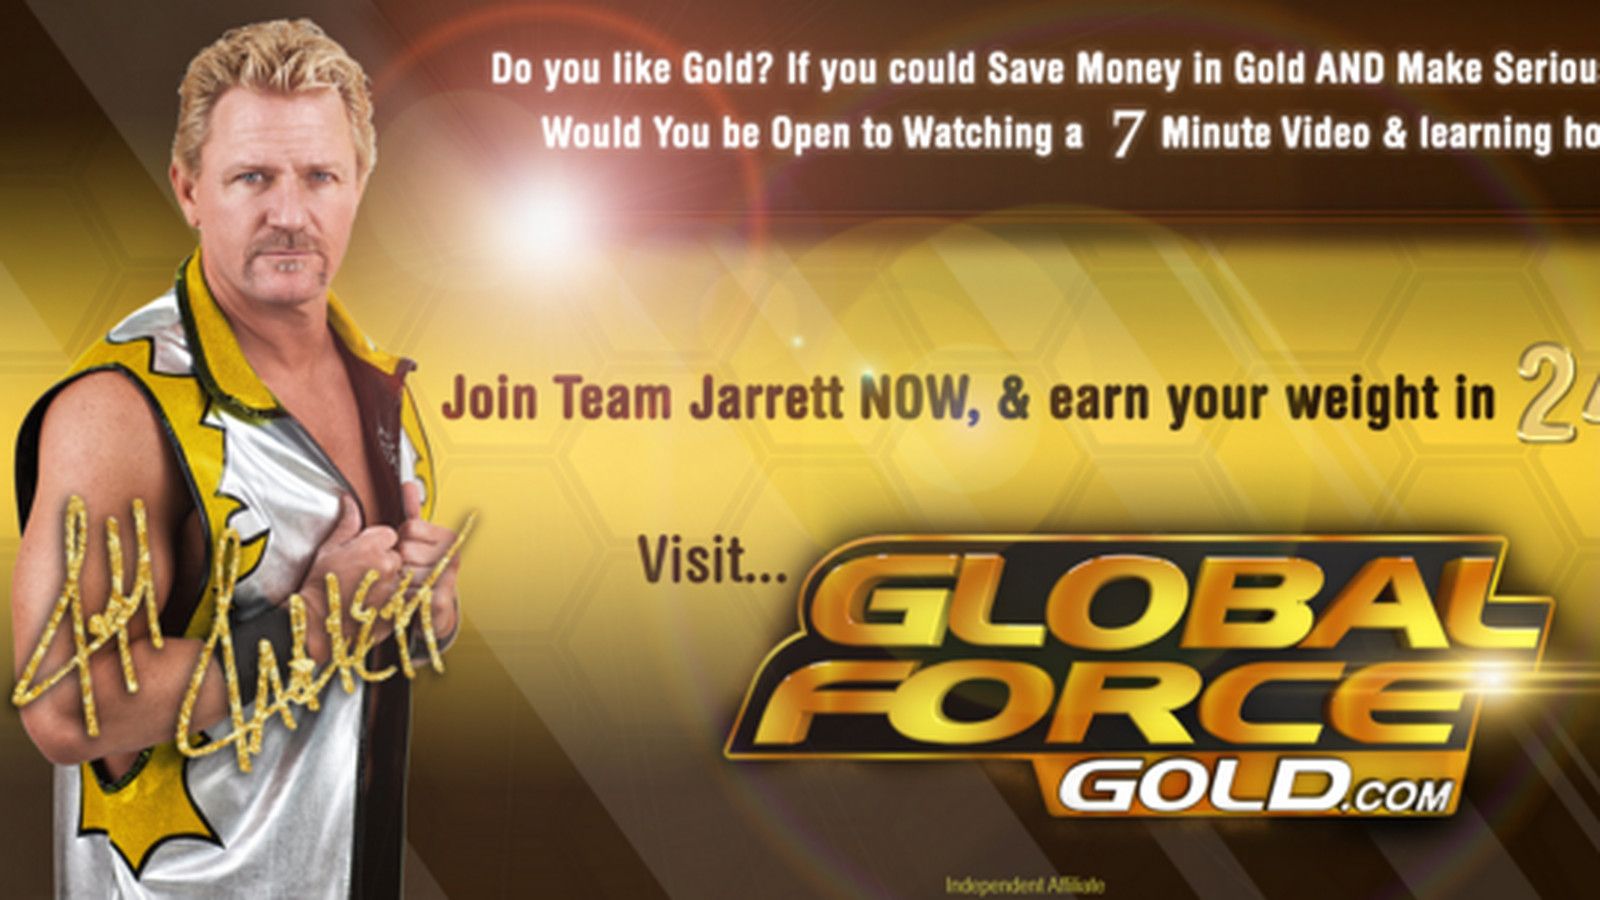 Jeff Jarrett Global Force Gold